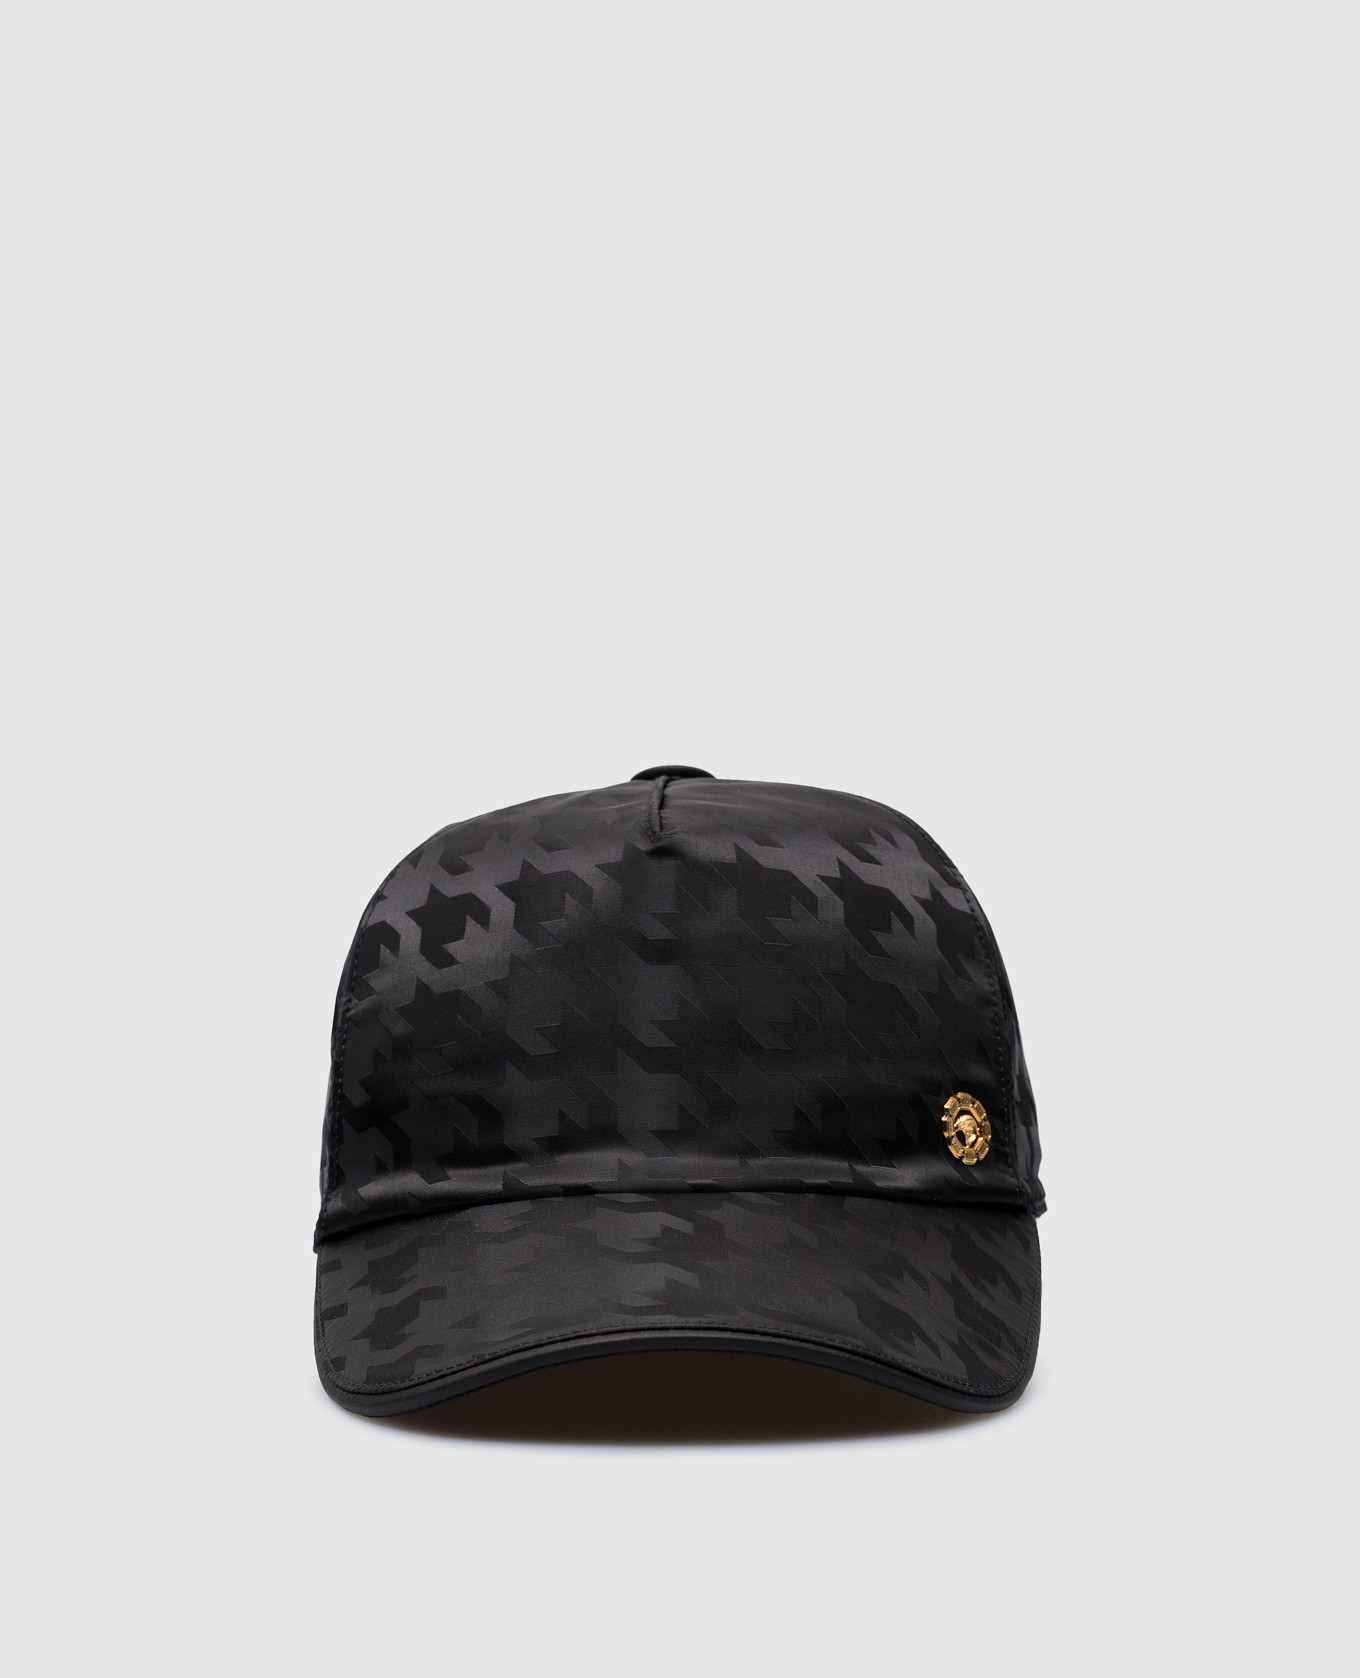 Black patterned cap